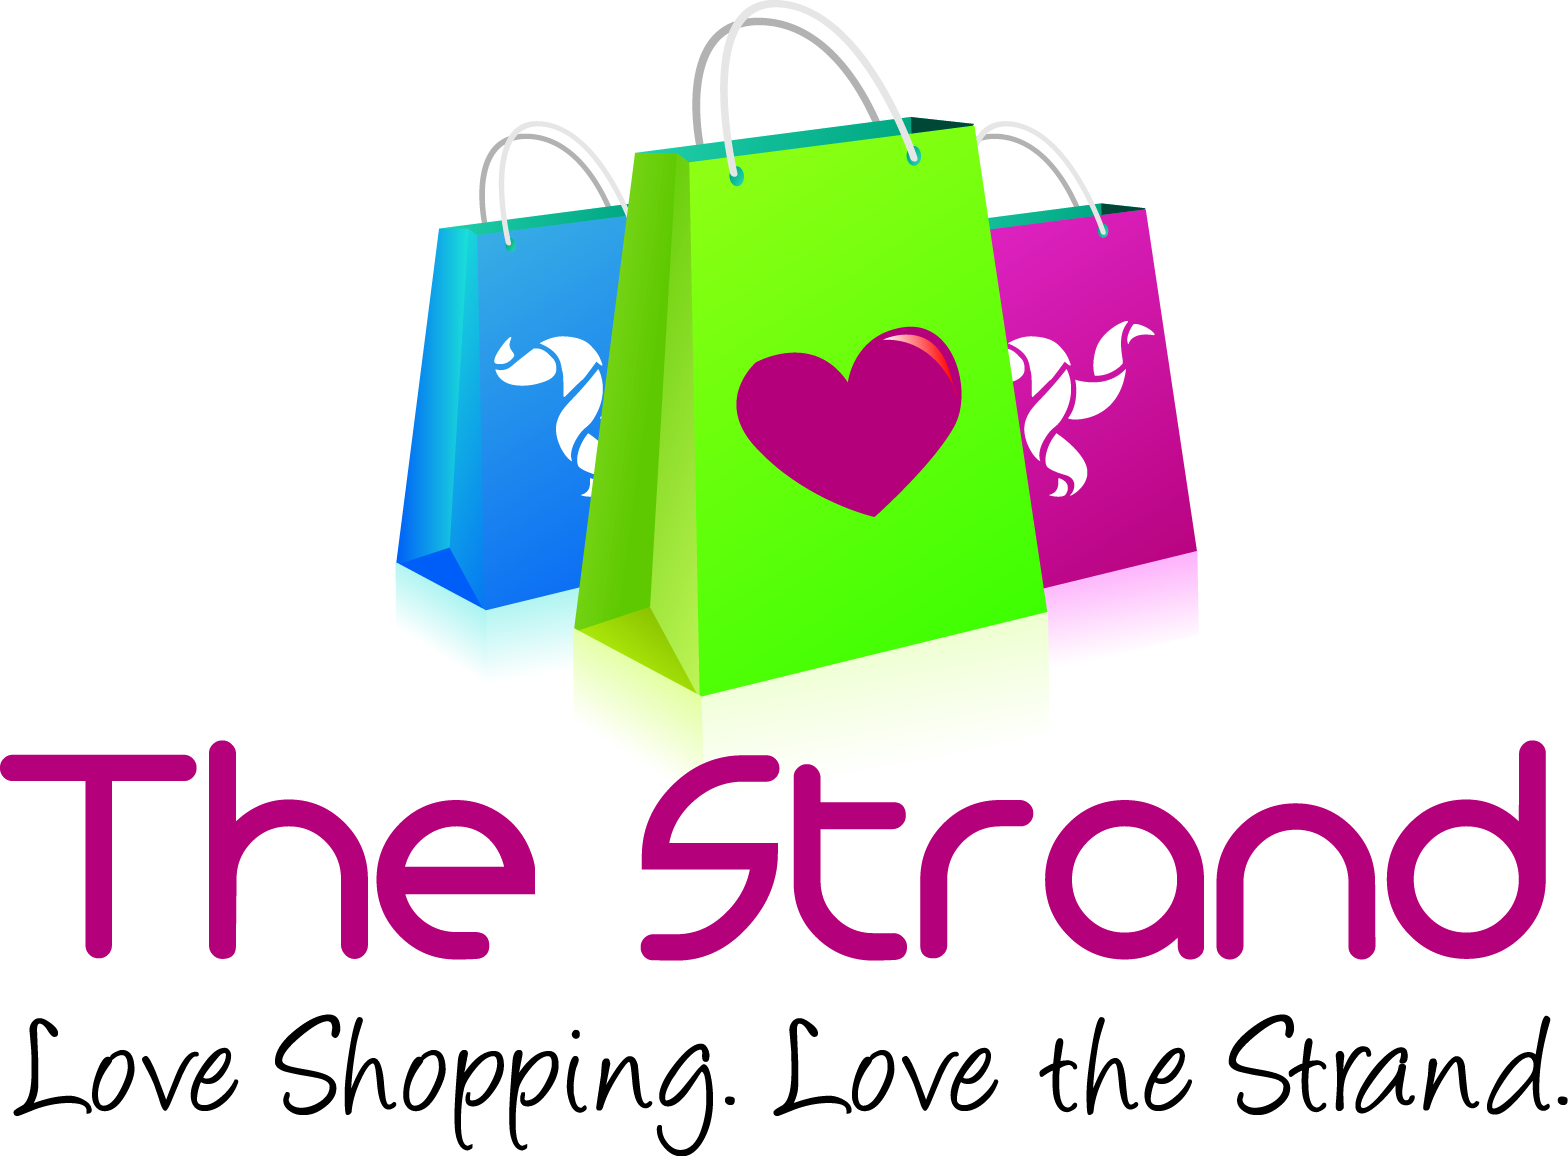 Shopping one love. Love to shop. Шоп. Shop to shop интернет магазин. Твой шоппинг интернет магазин.